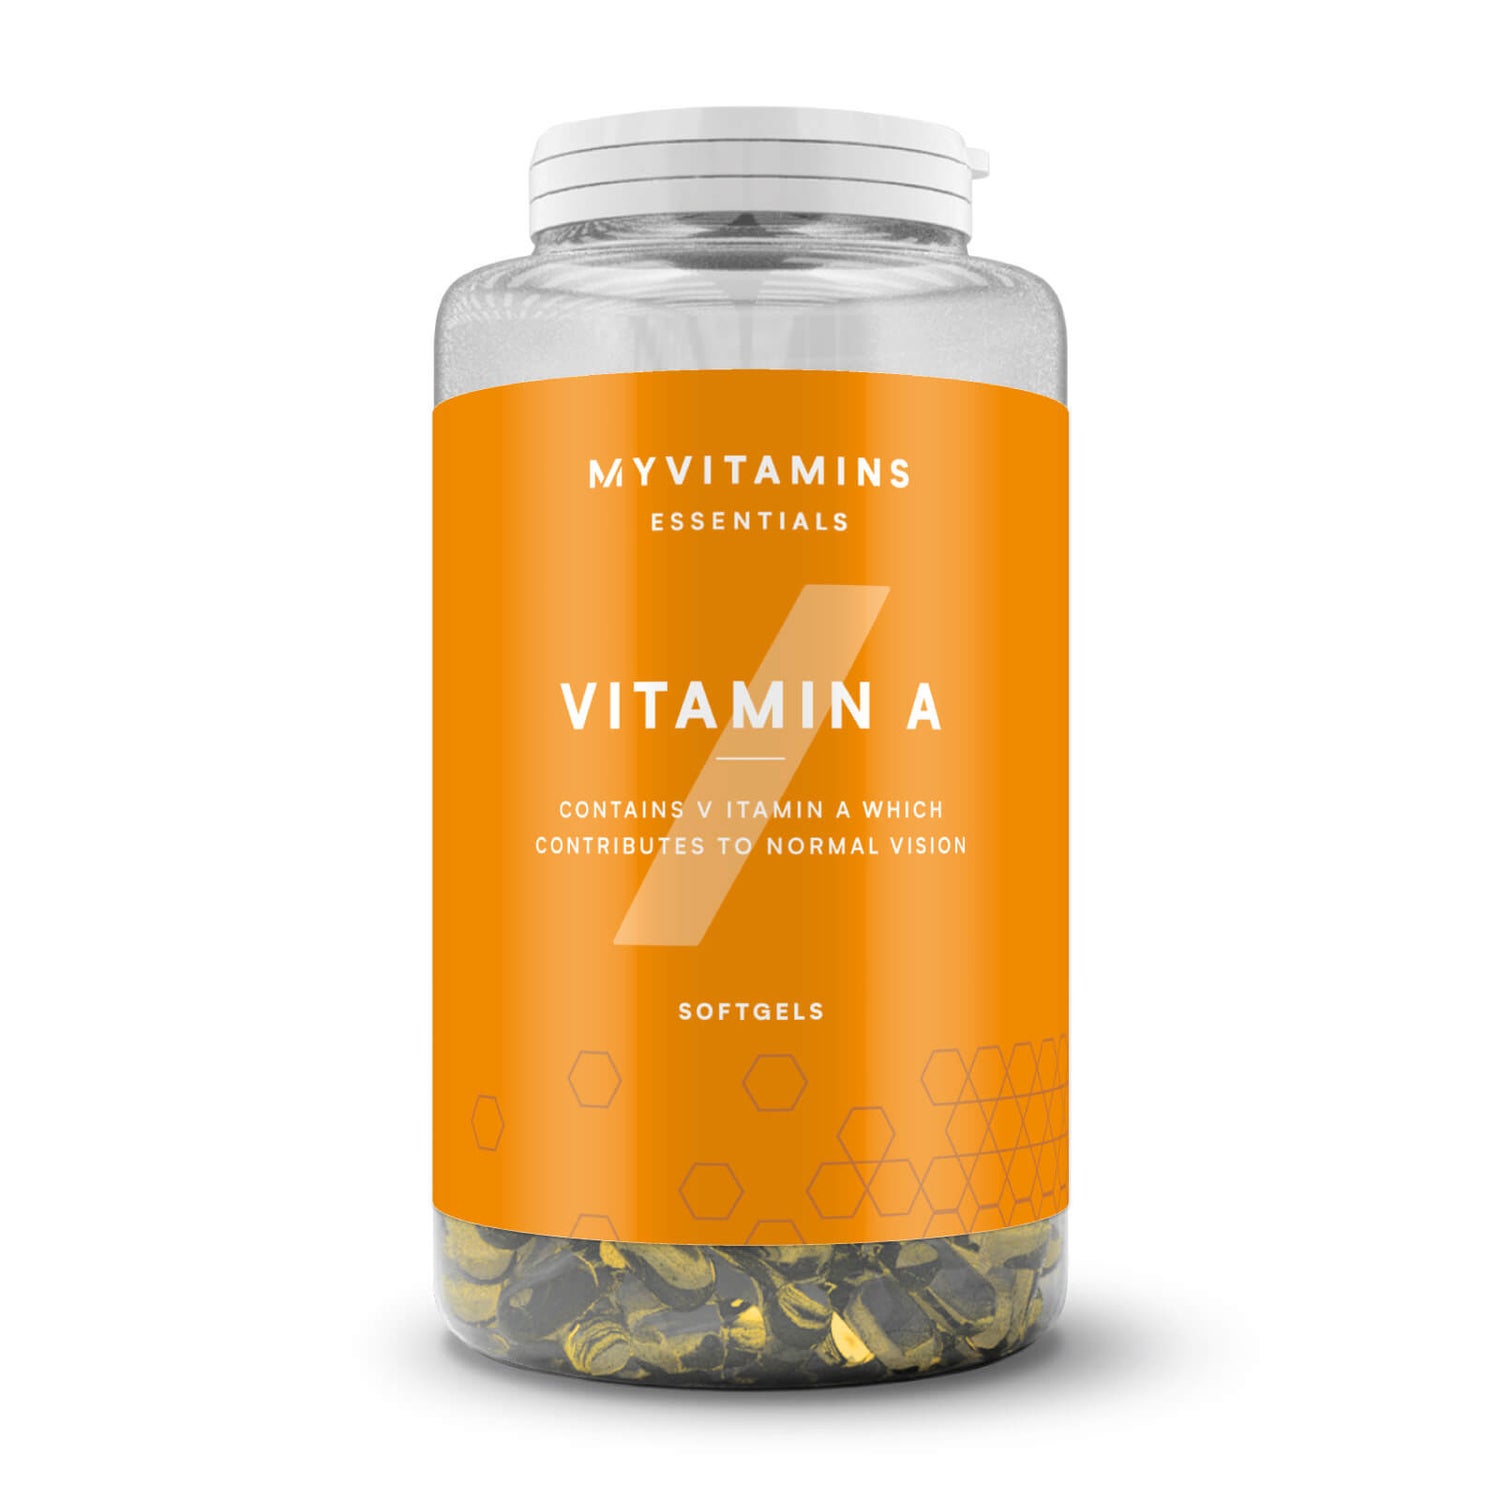 Myvitamins Vitamin A